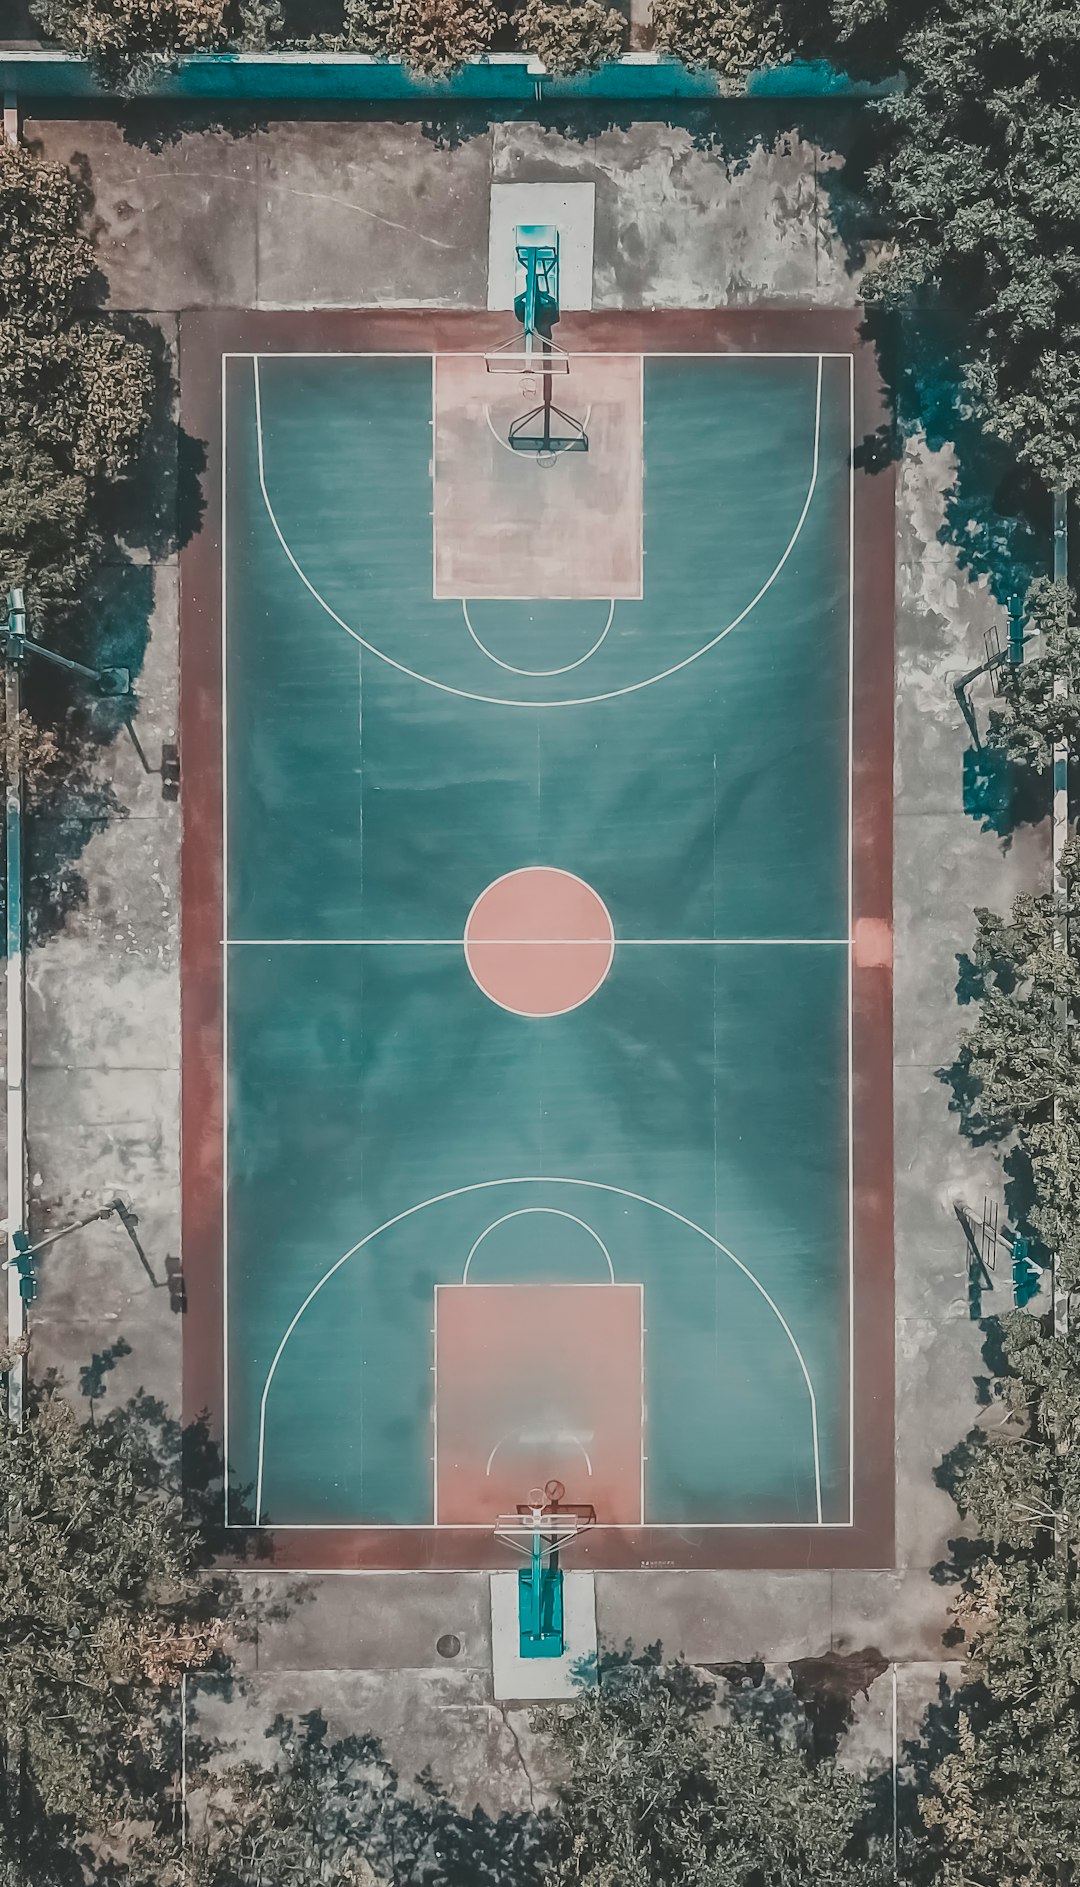 bird's eye view photography of basket ball court